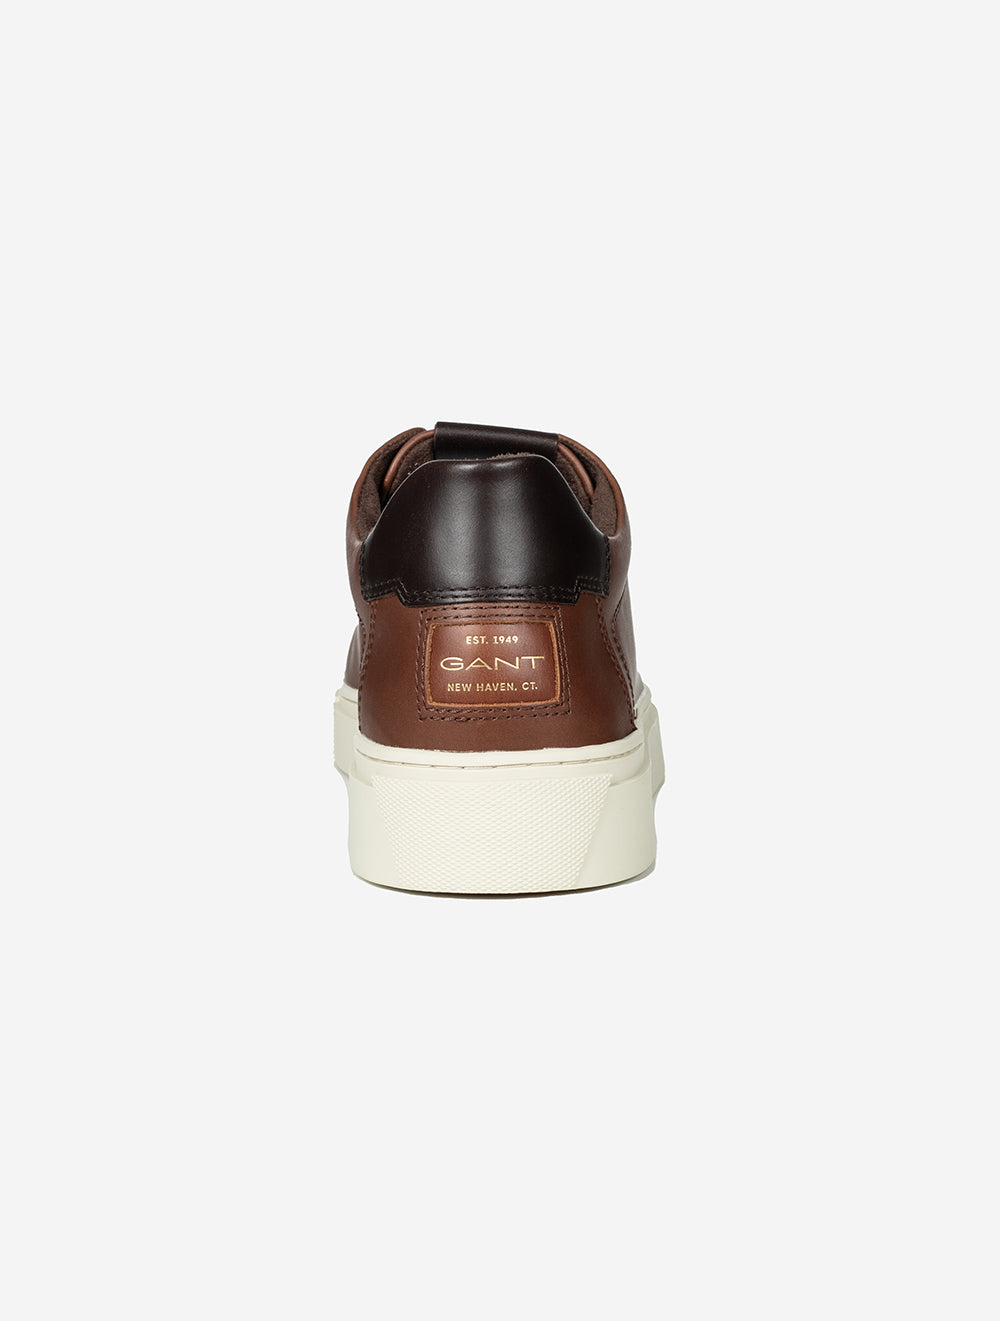 Mc Julien Sneakers Cognac Dark Brown